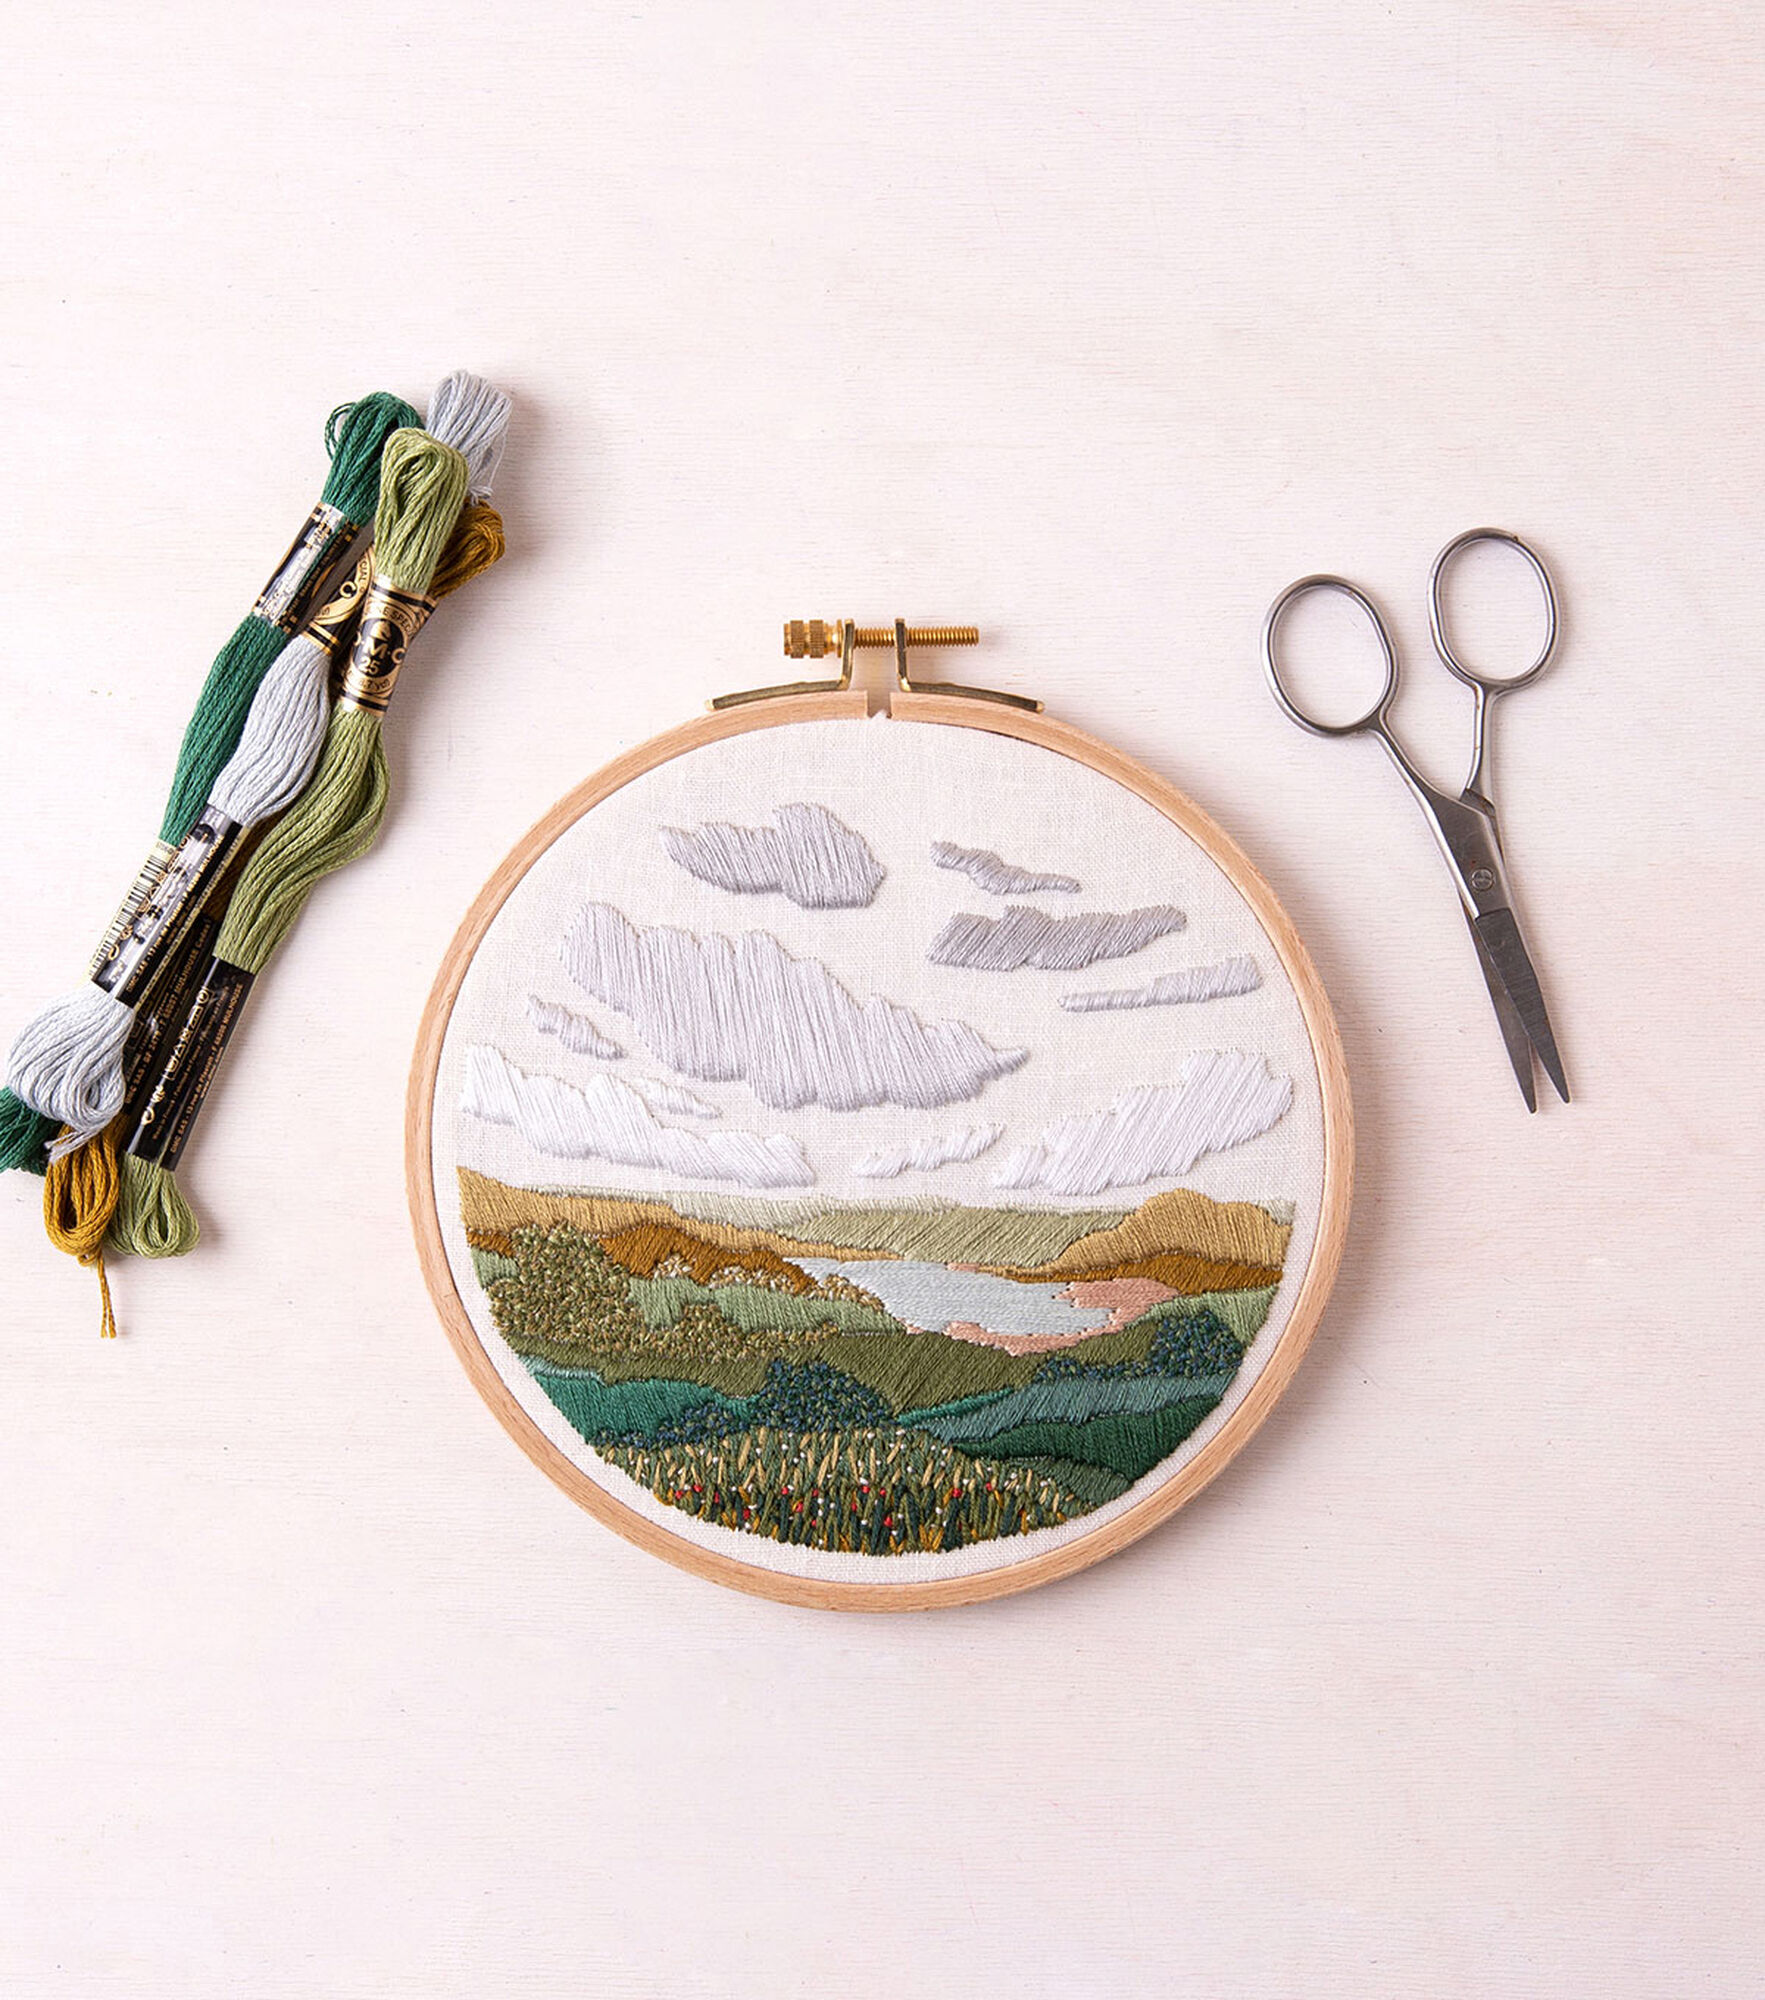 Landscape Embroidery Video Tutorial on Creativebug